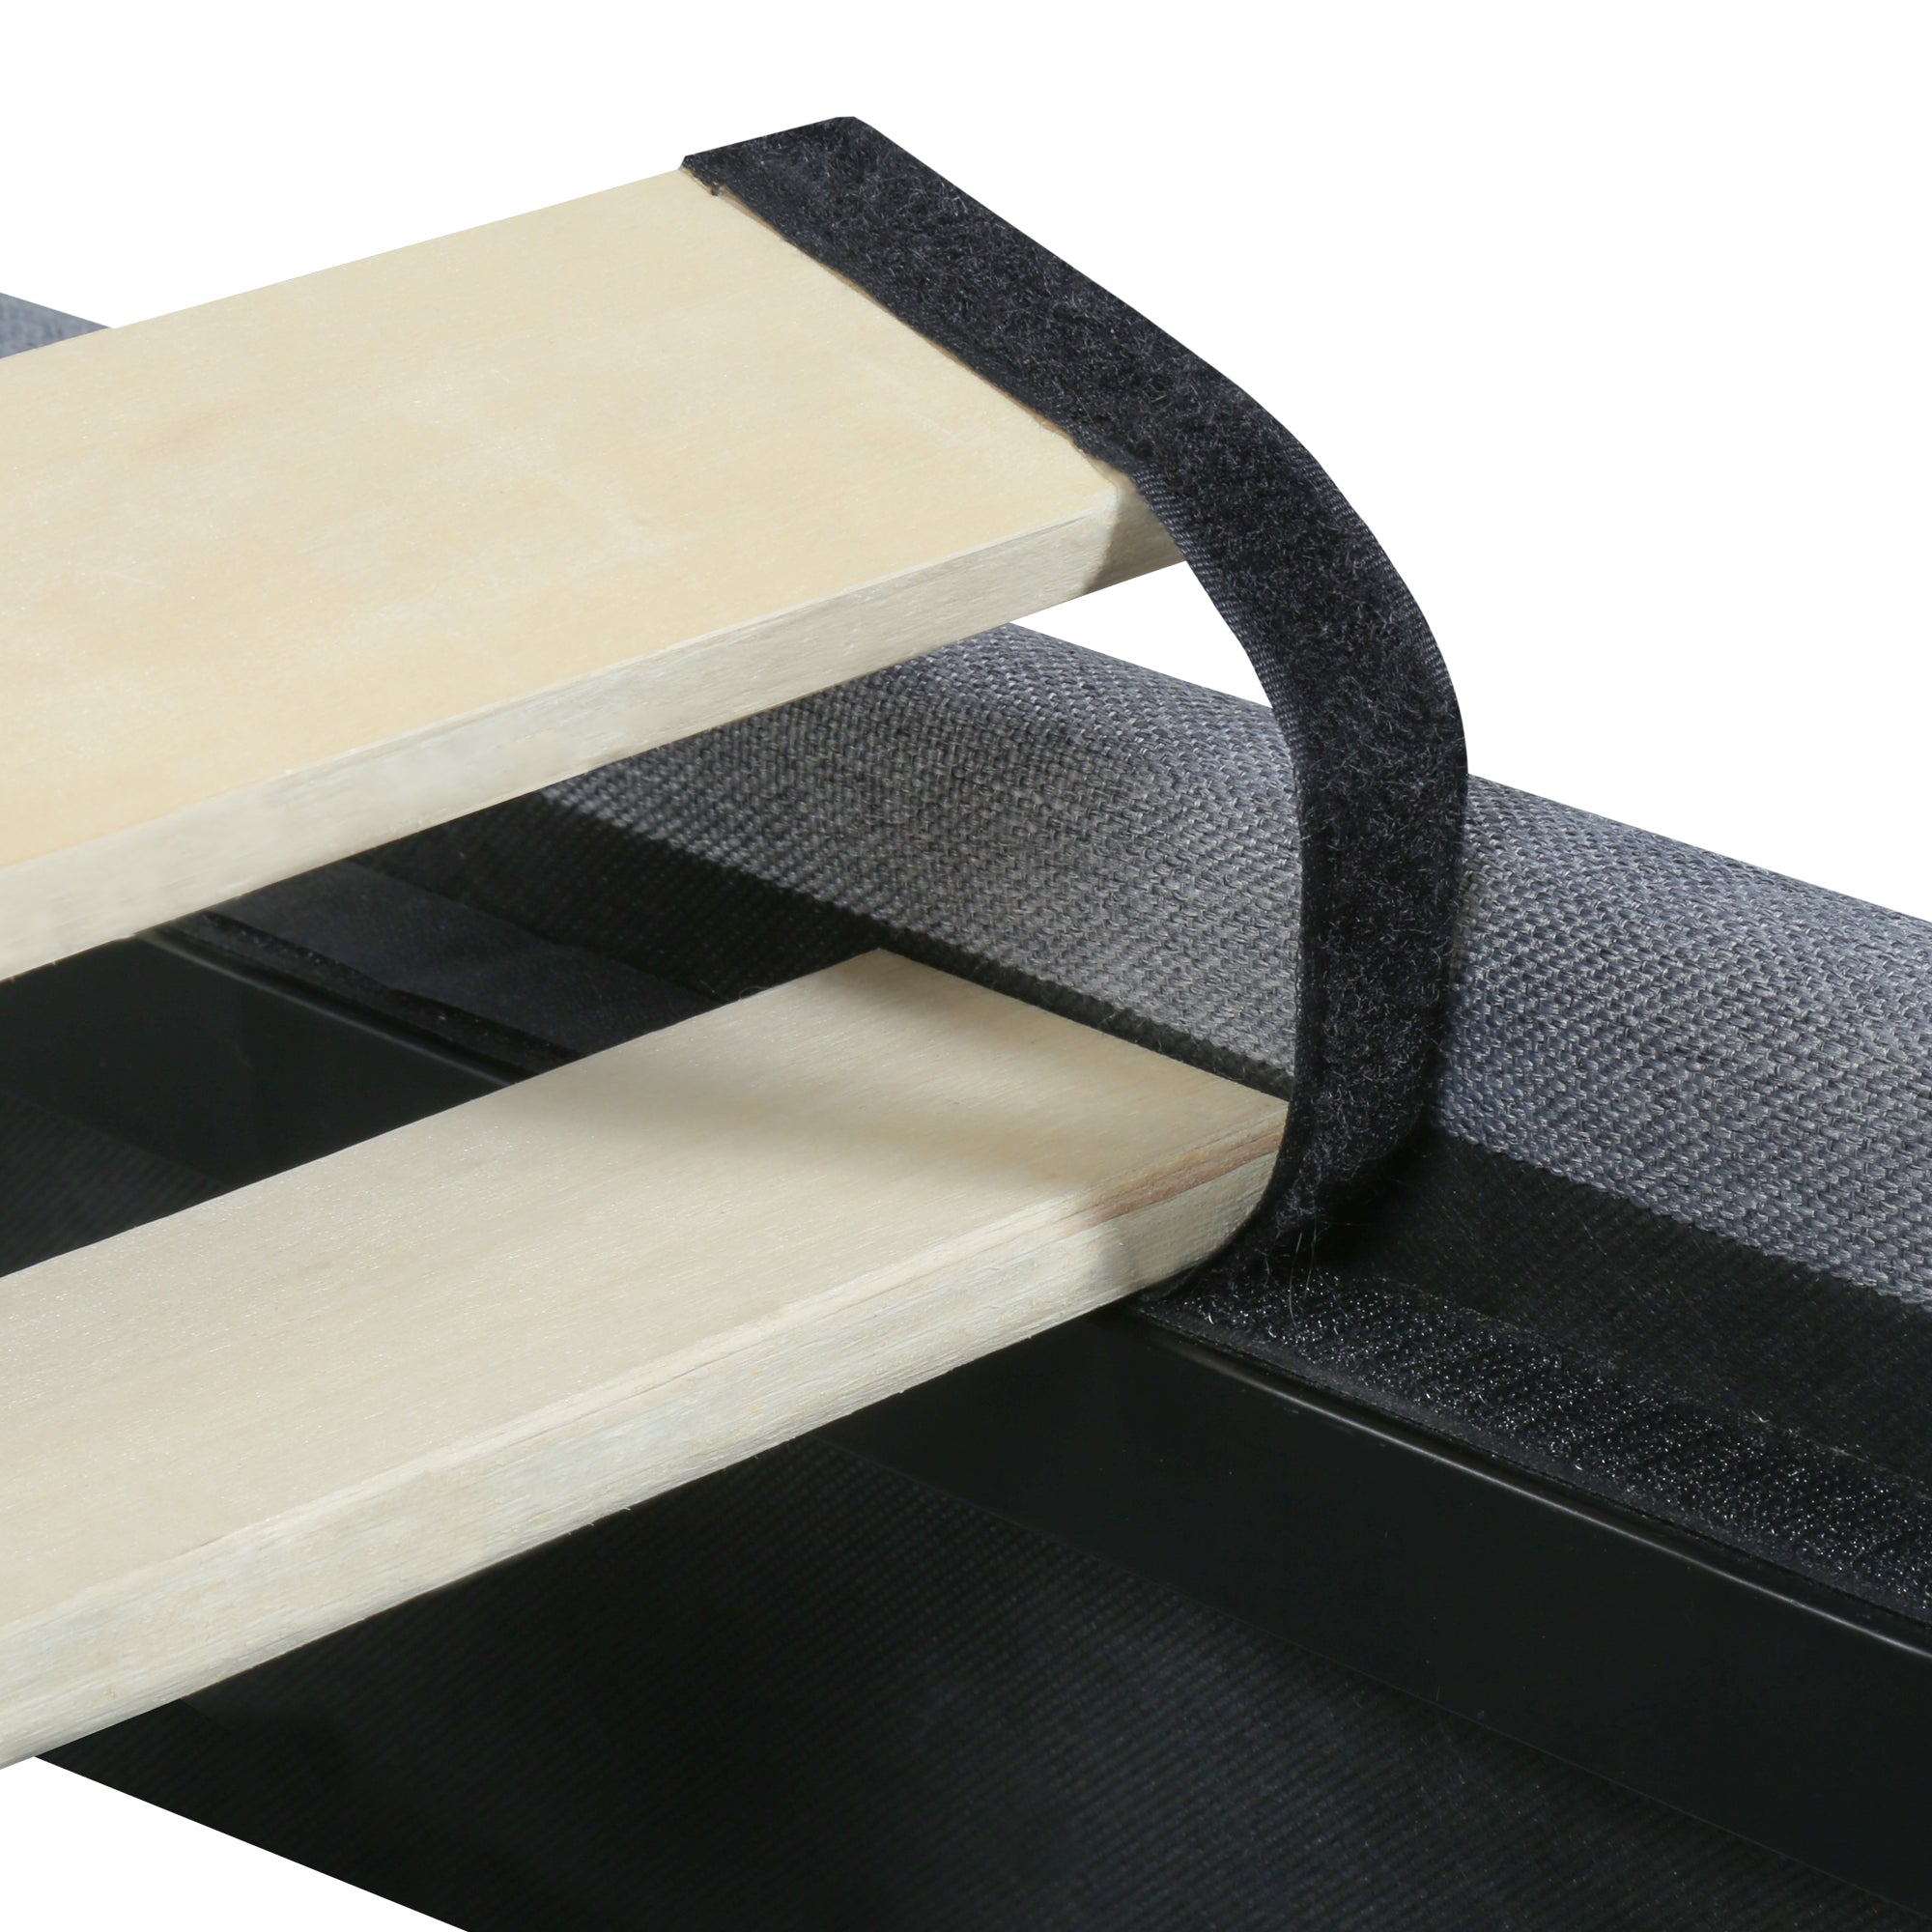 14 Inch Dura Metal Upholstered Headboard Premium Platform Bed Frame